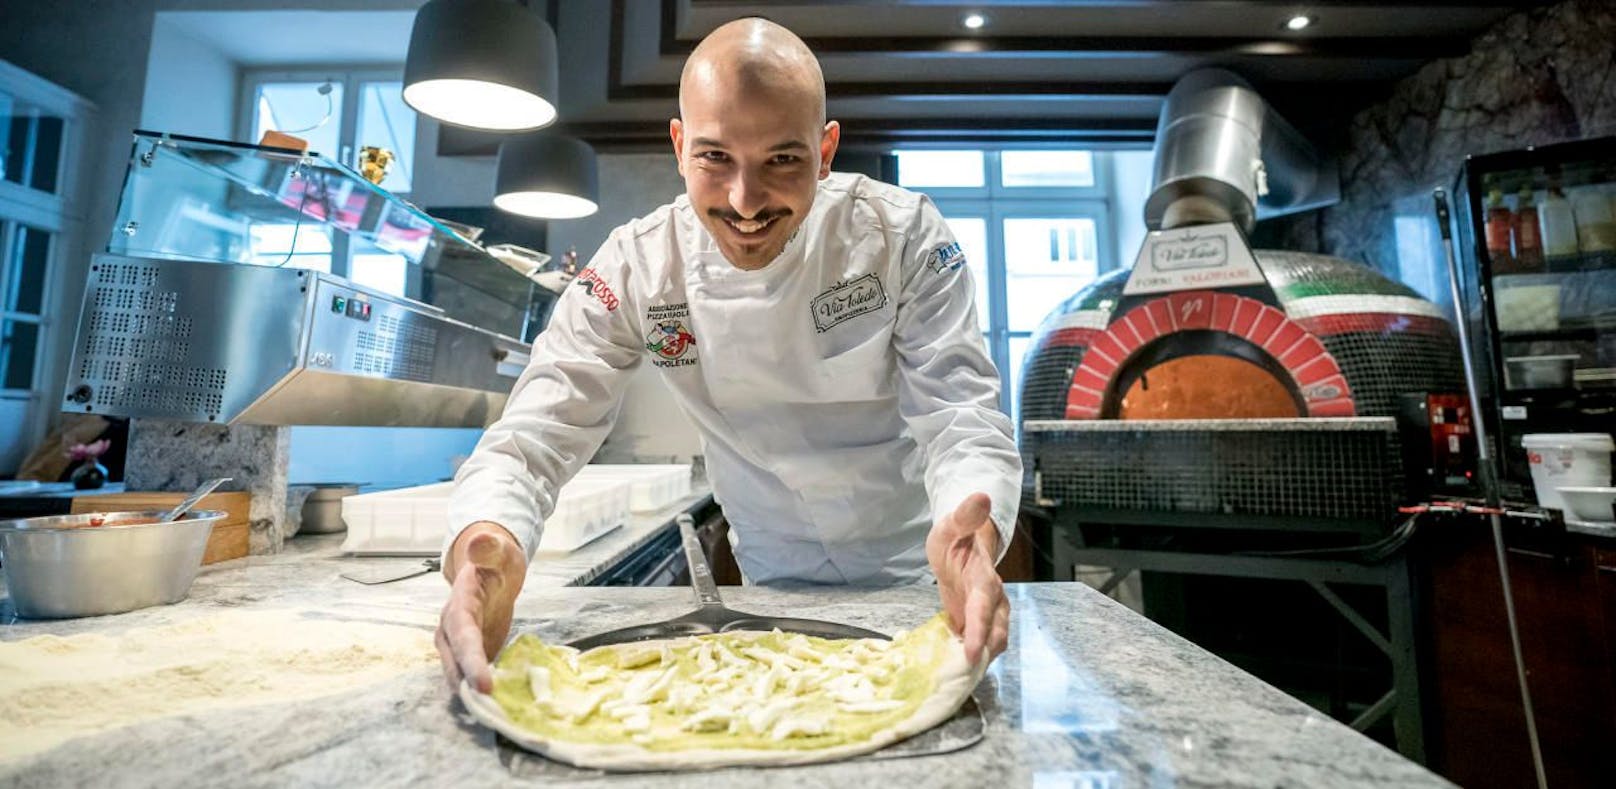 Francesco Calò ist neuer Pizza-Weltmeister.